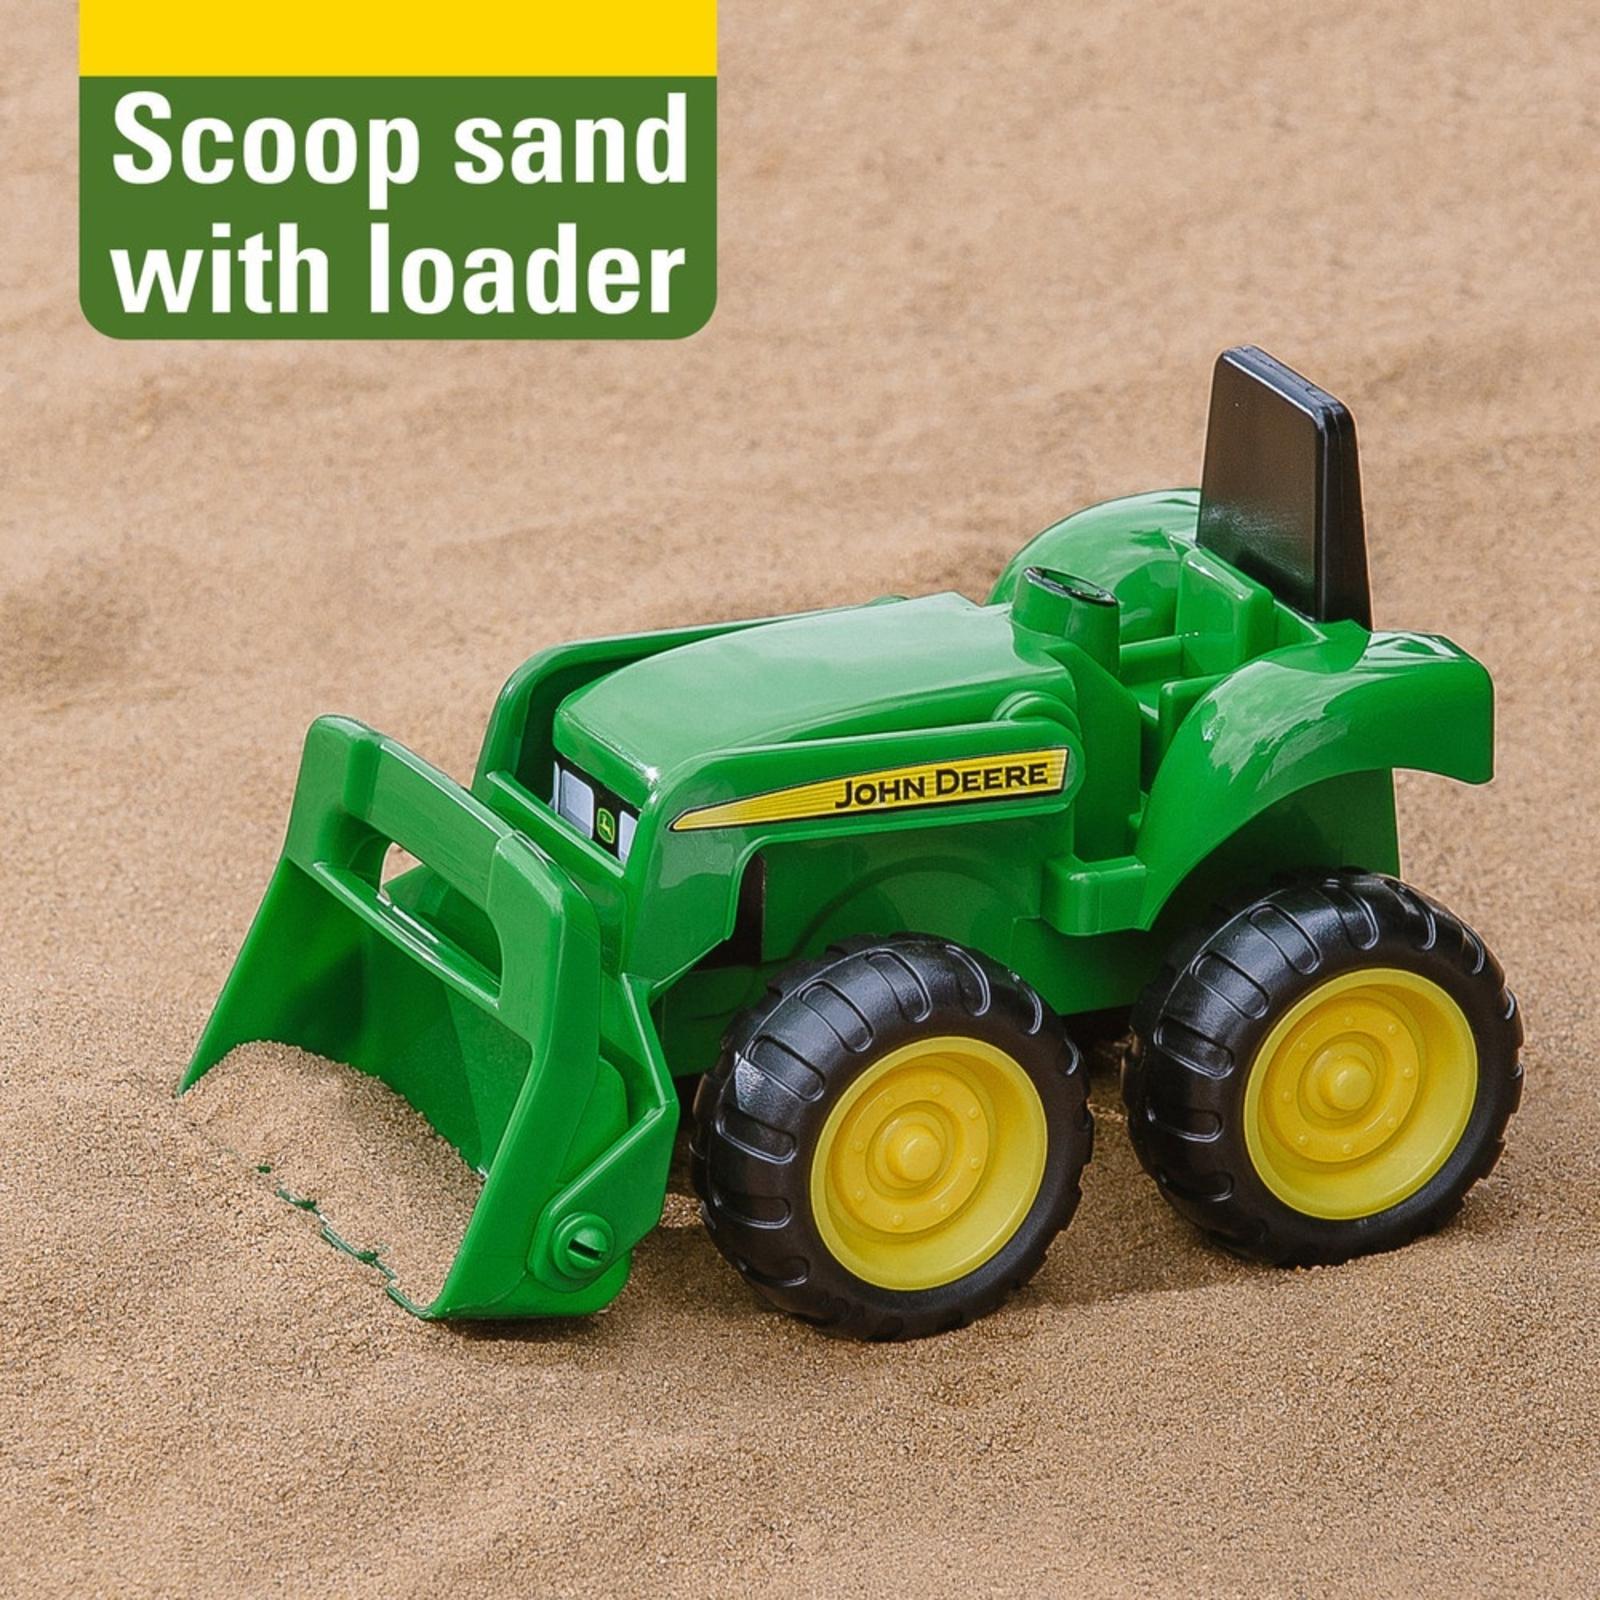 scoop sand with loader